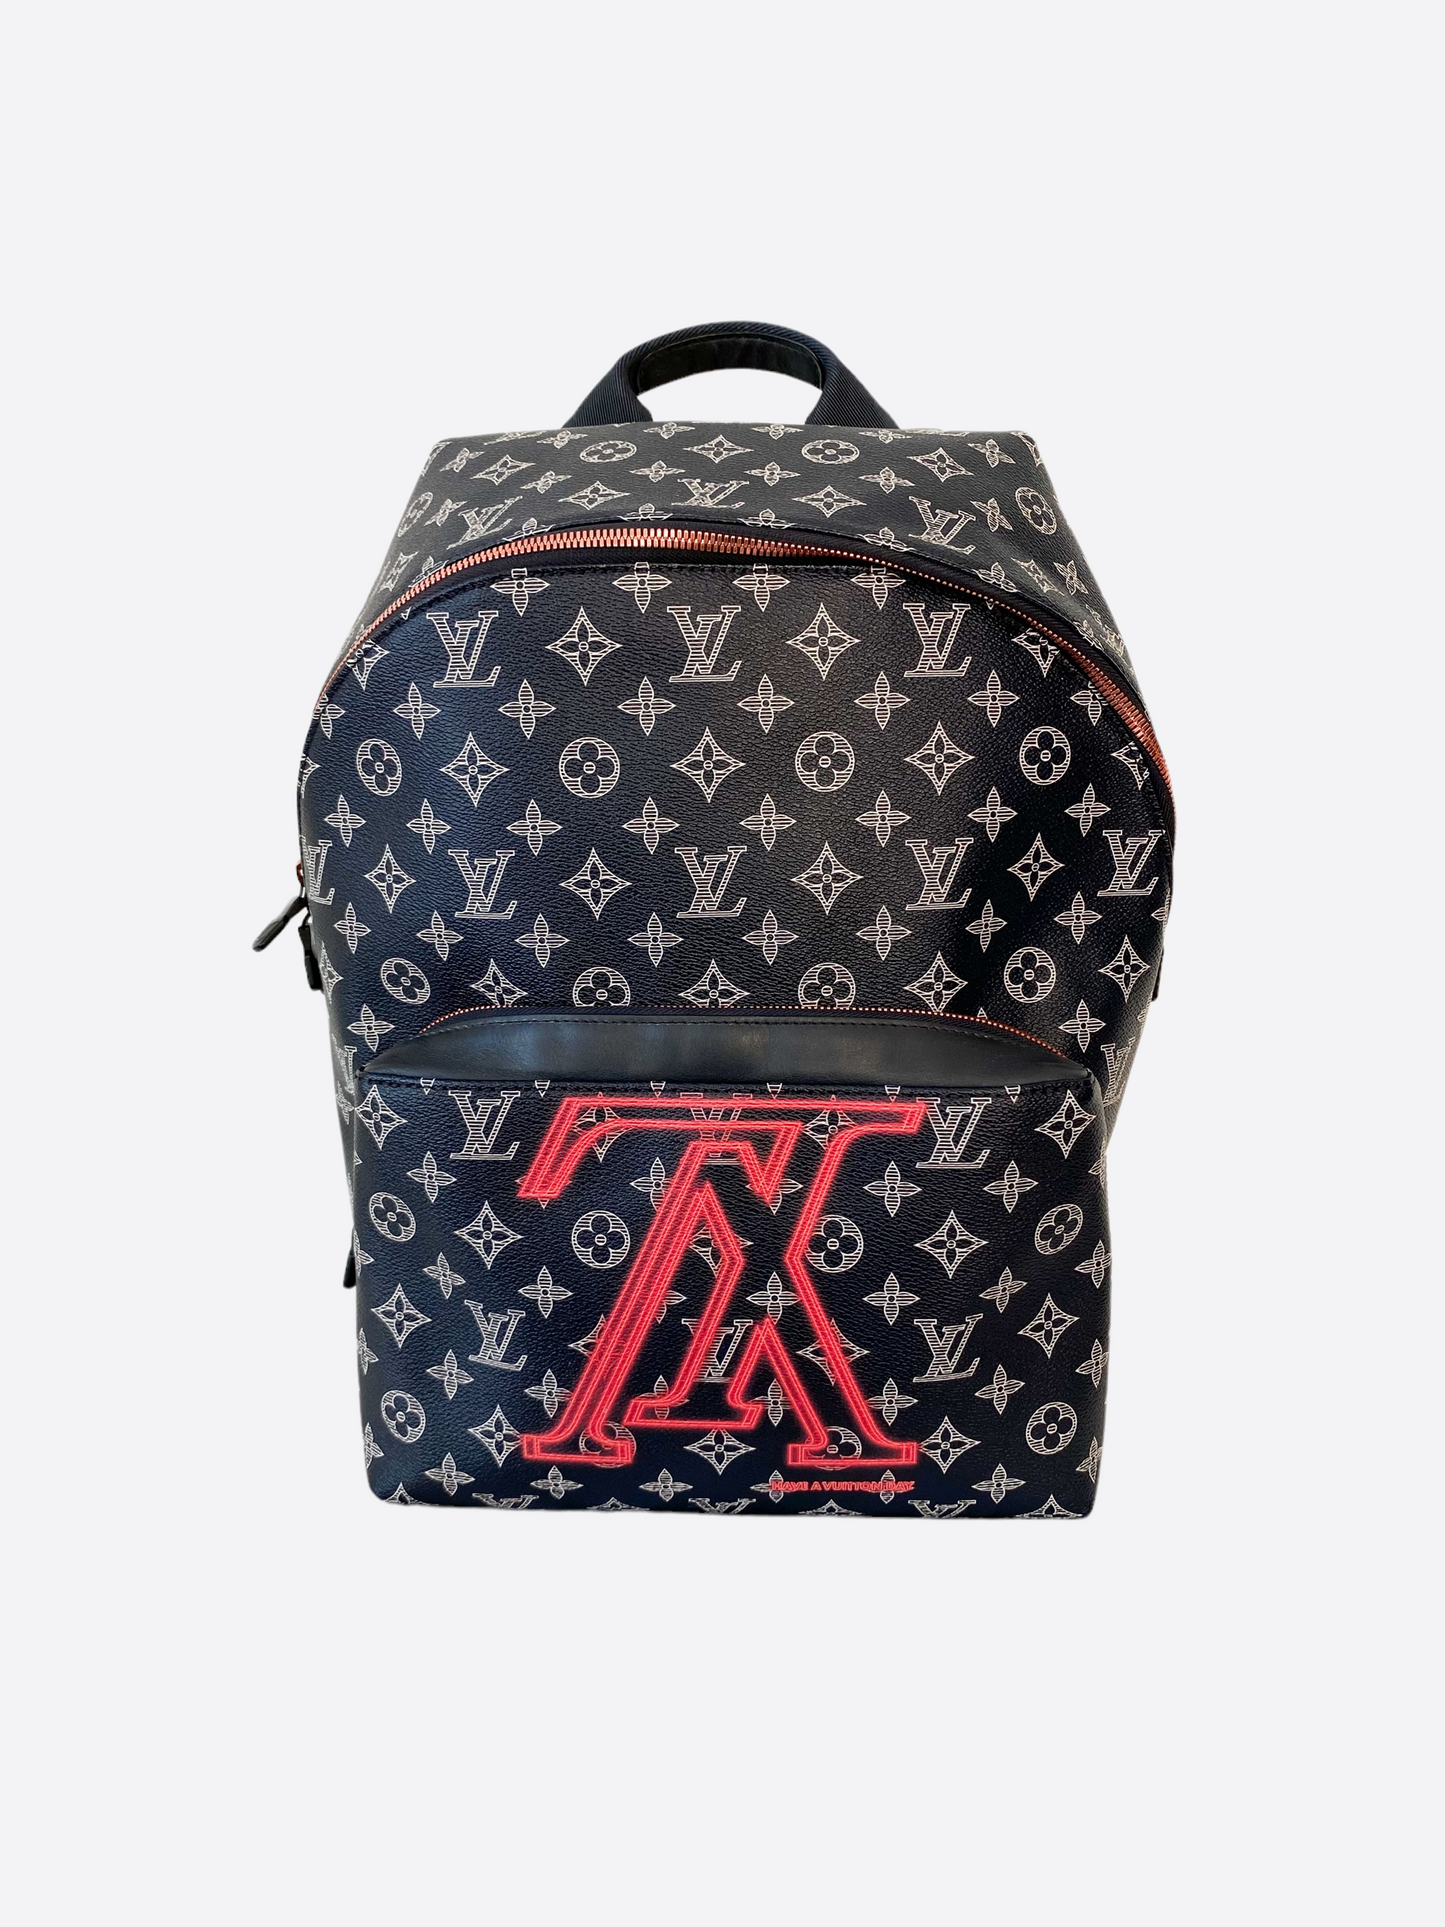 Louis Vuitton Kim Jones Upside Down Monogram Backpack